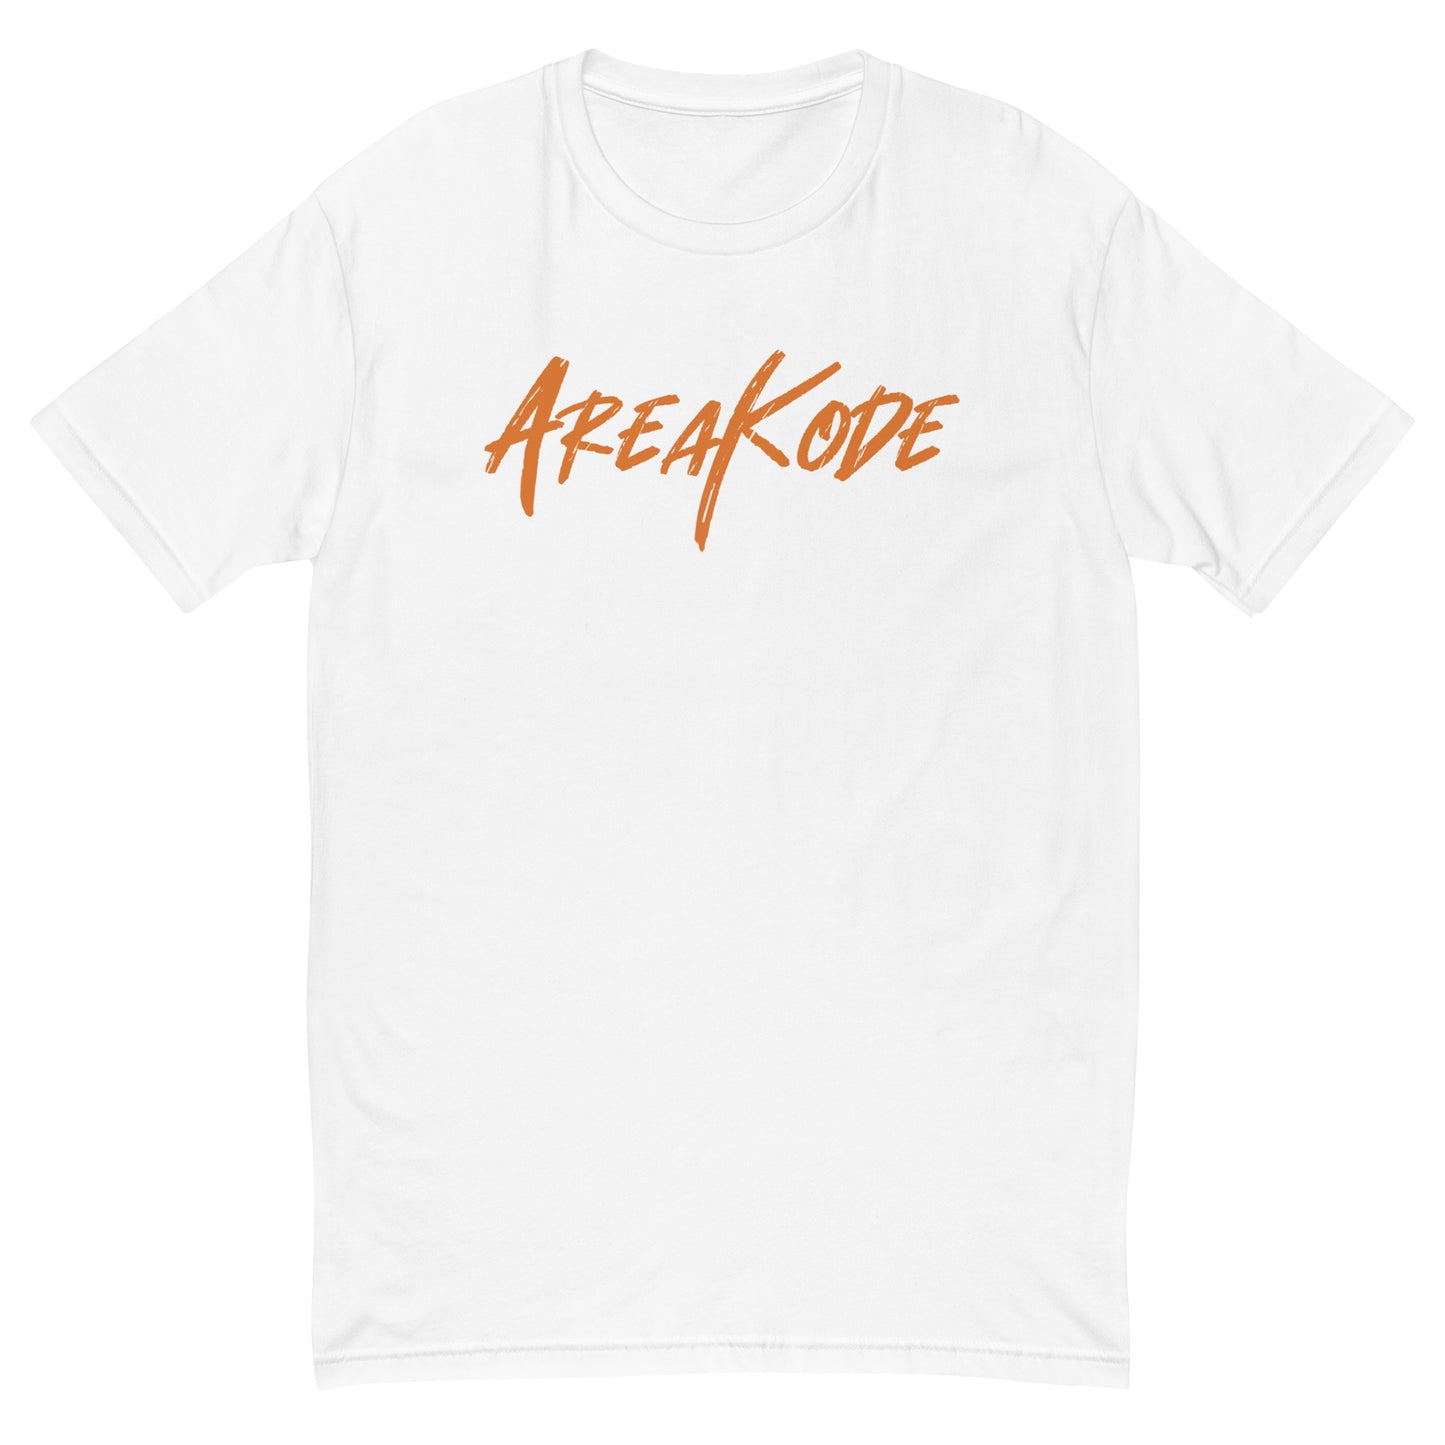 M| AreaKode (orange)